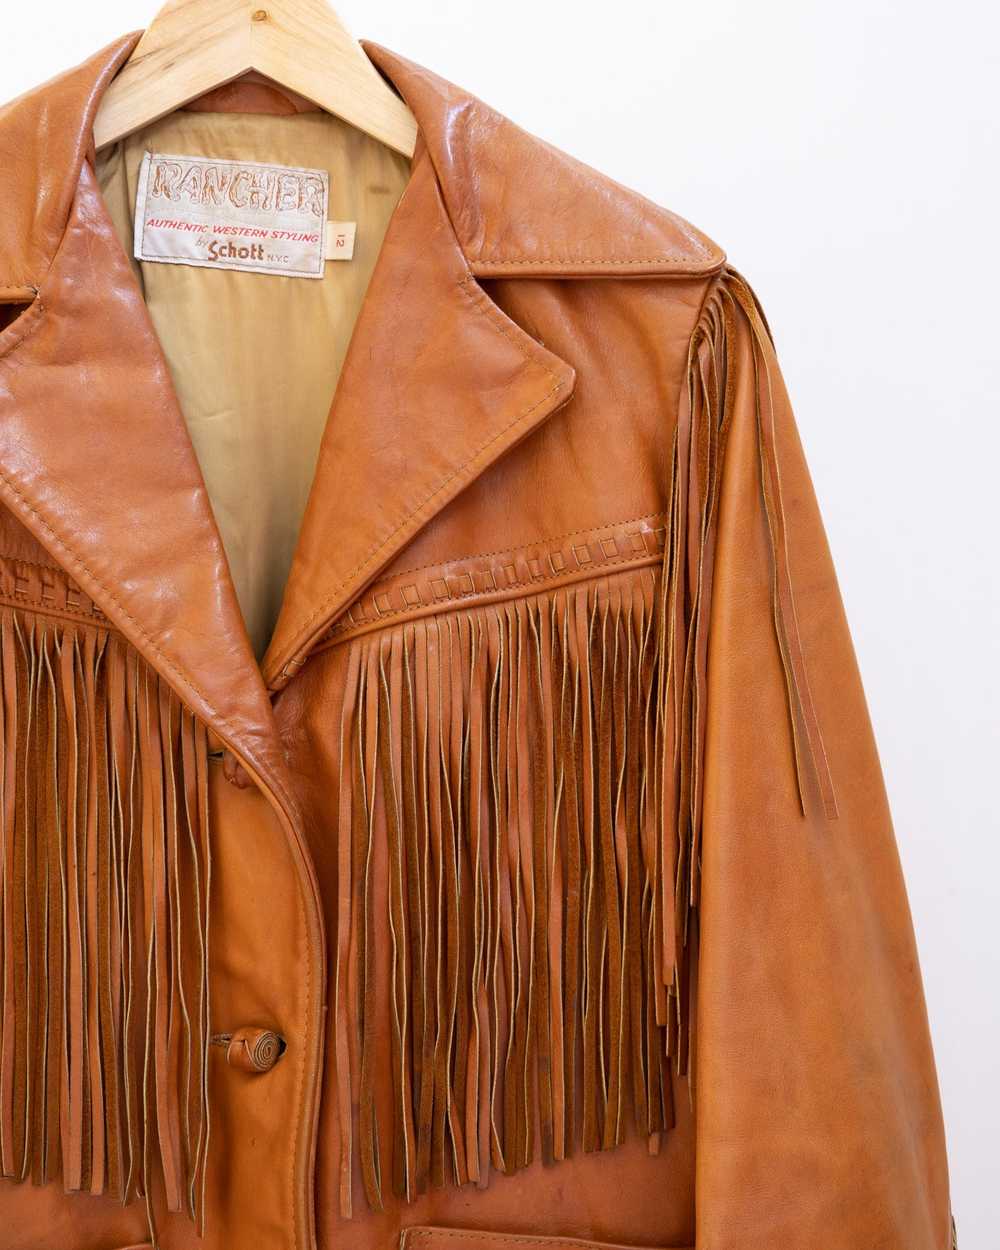 Shcott Rancher Western Leather Jacket - image 6